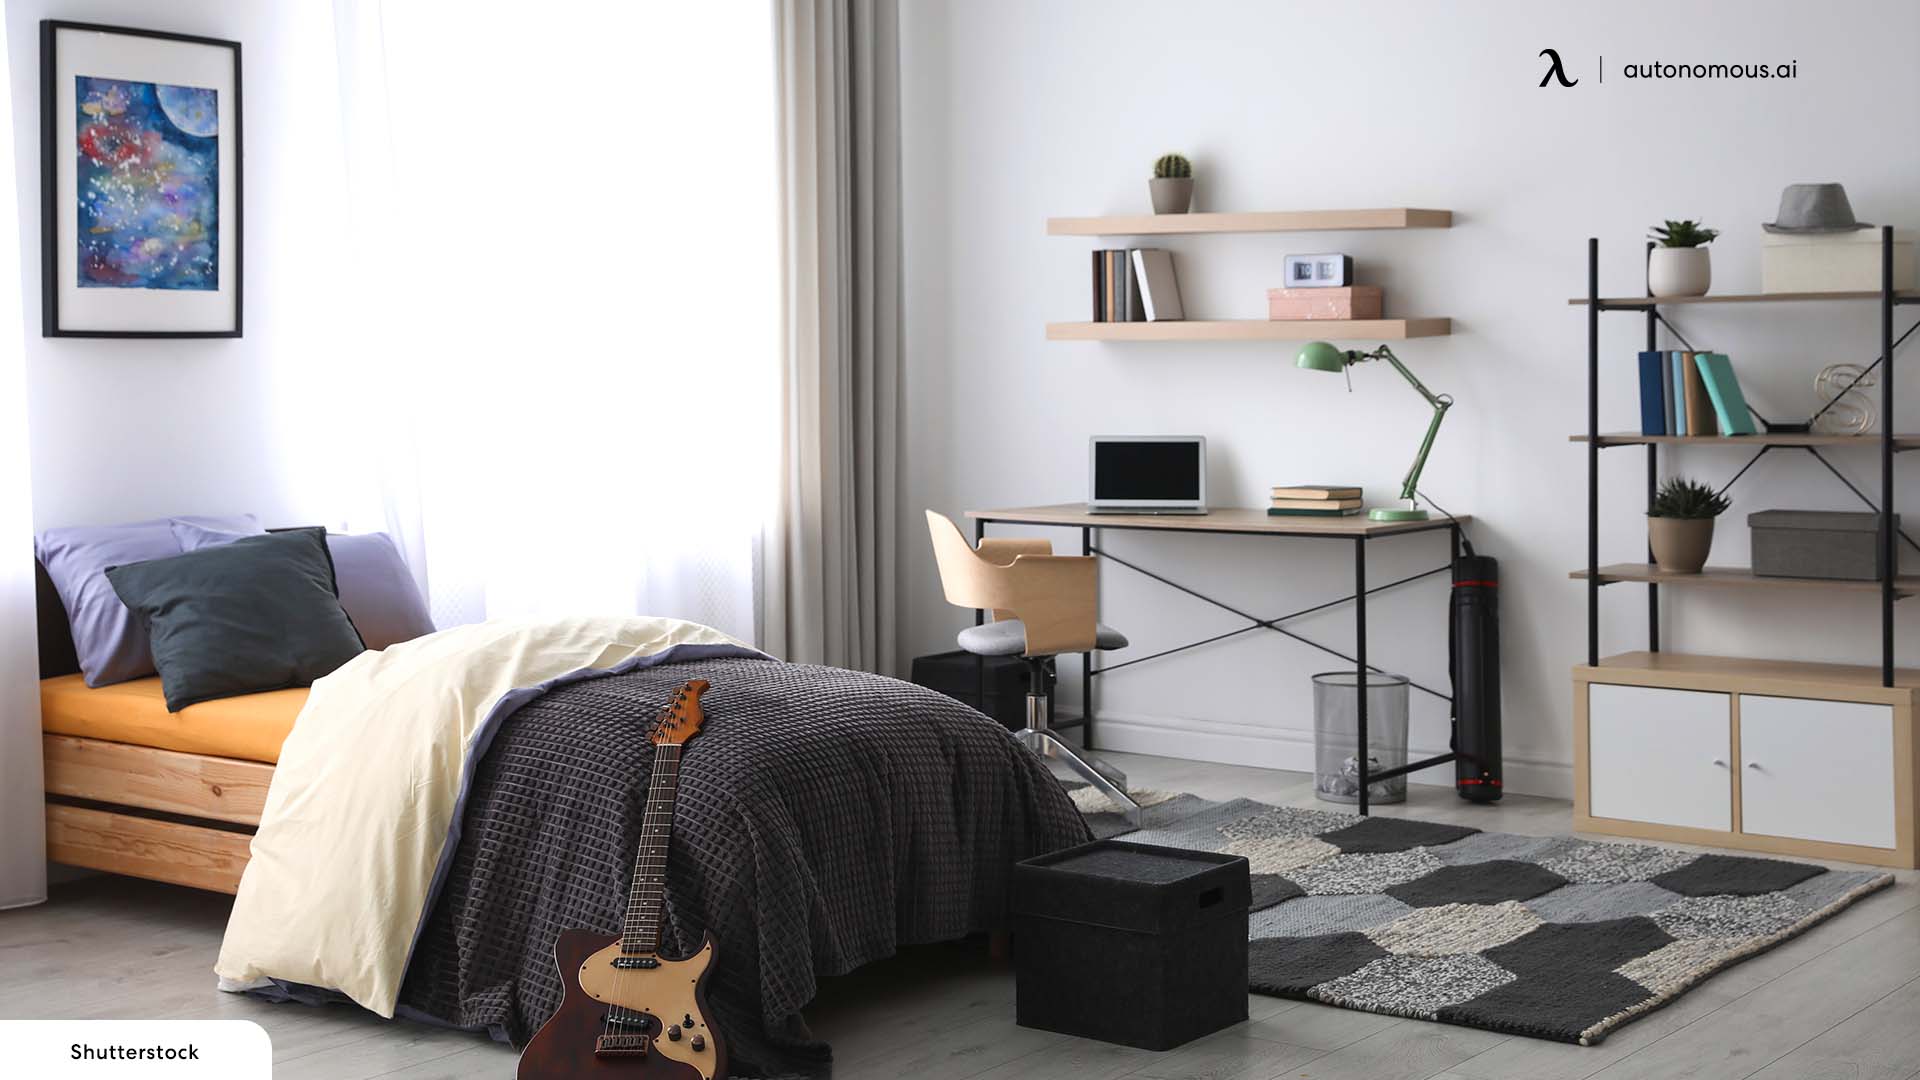 5 Bedroom Office Design Ideas of 2022